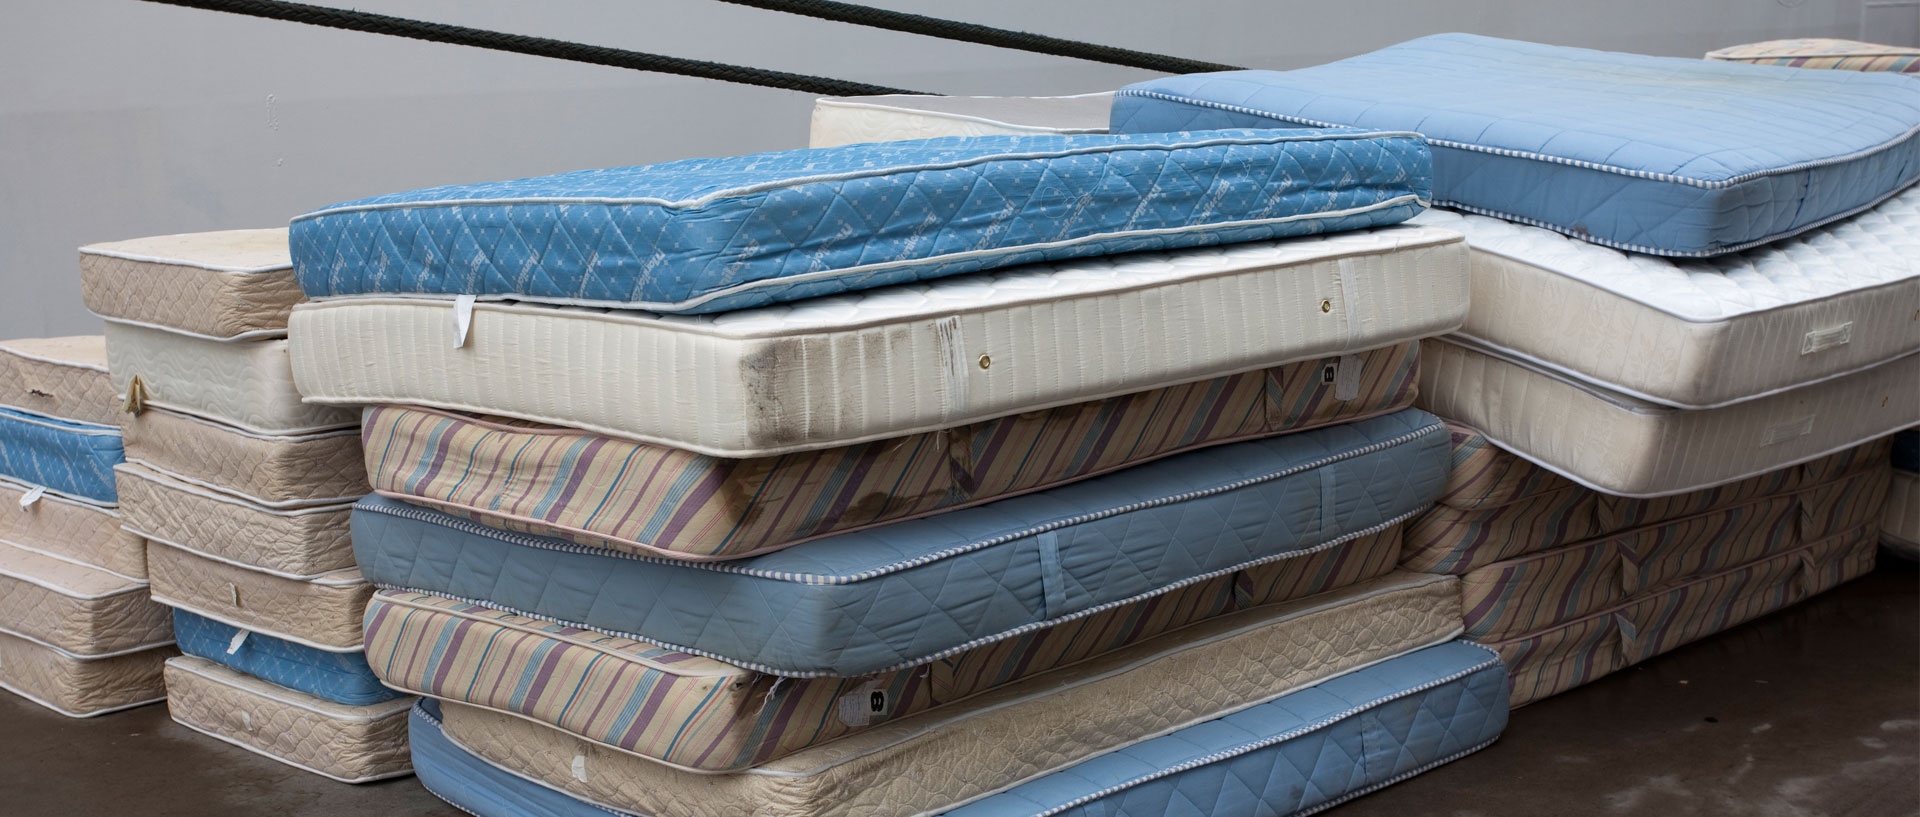 used mattresses for sale in philadelphia